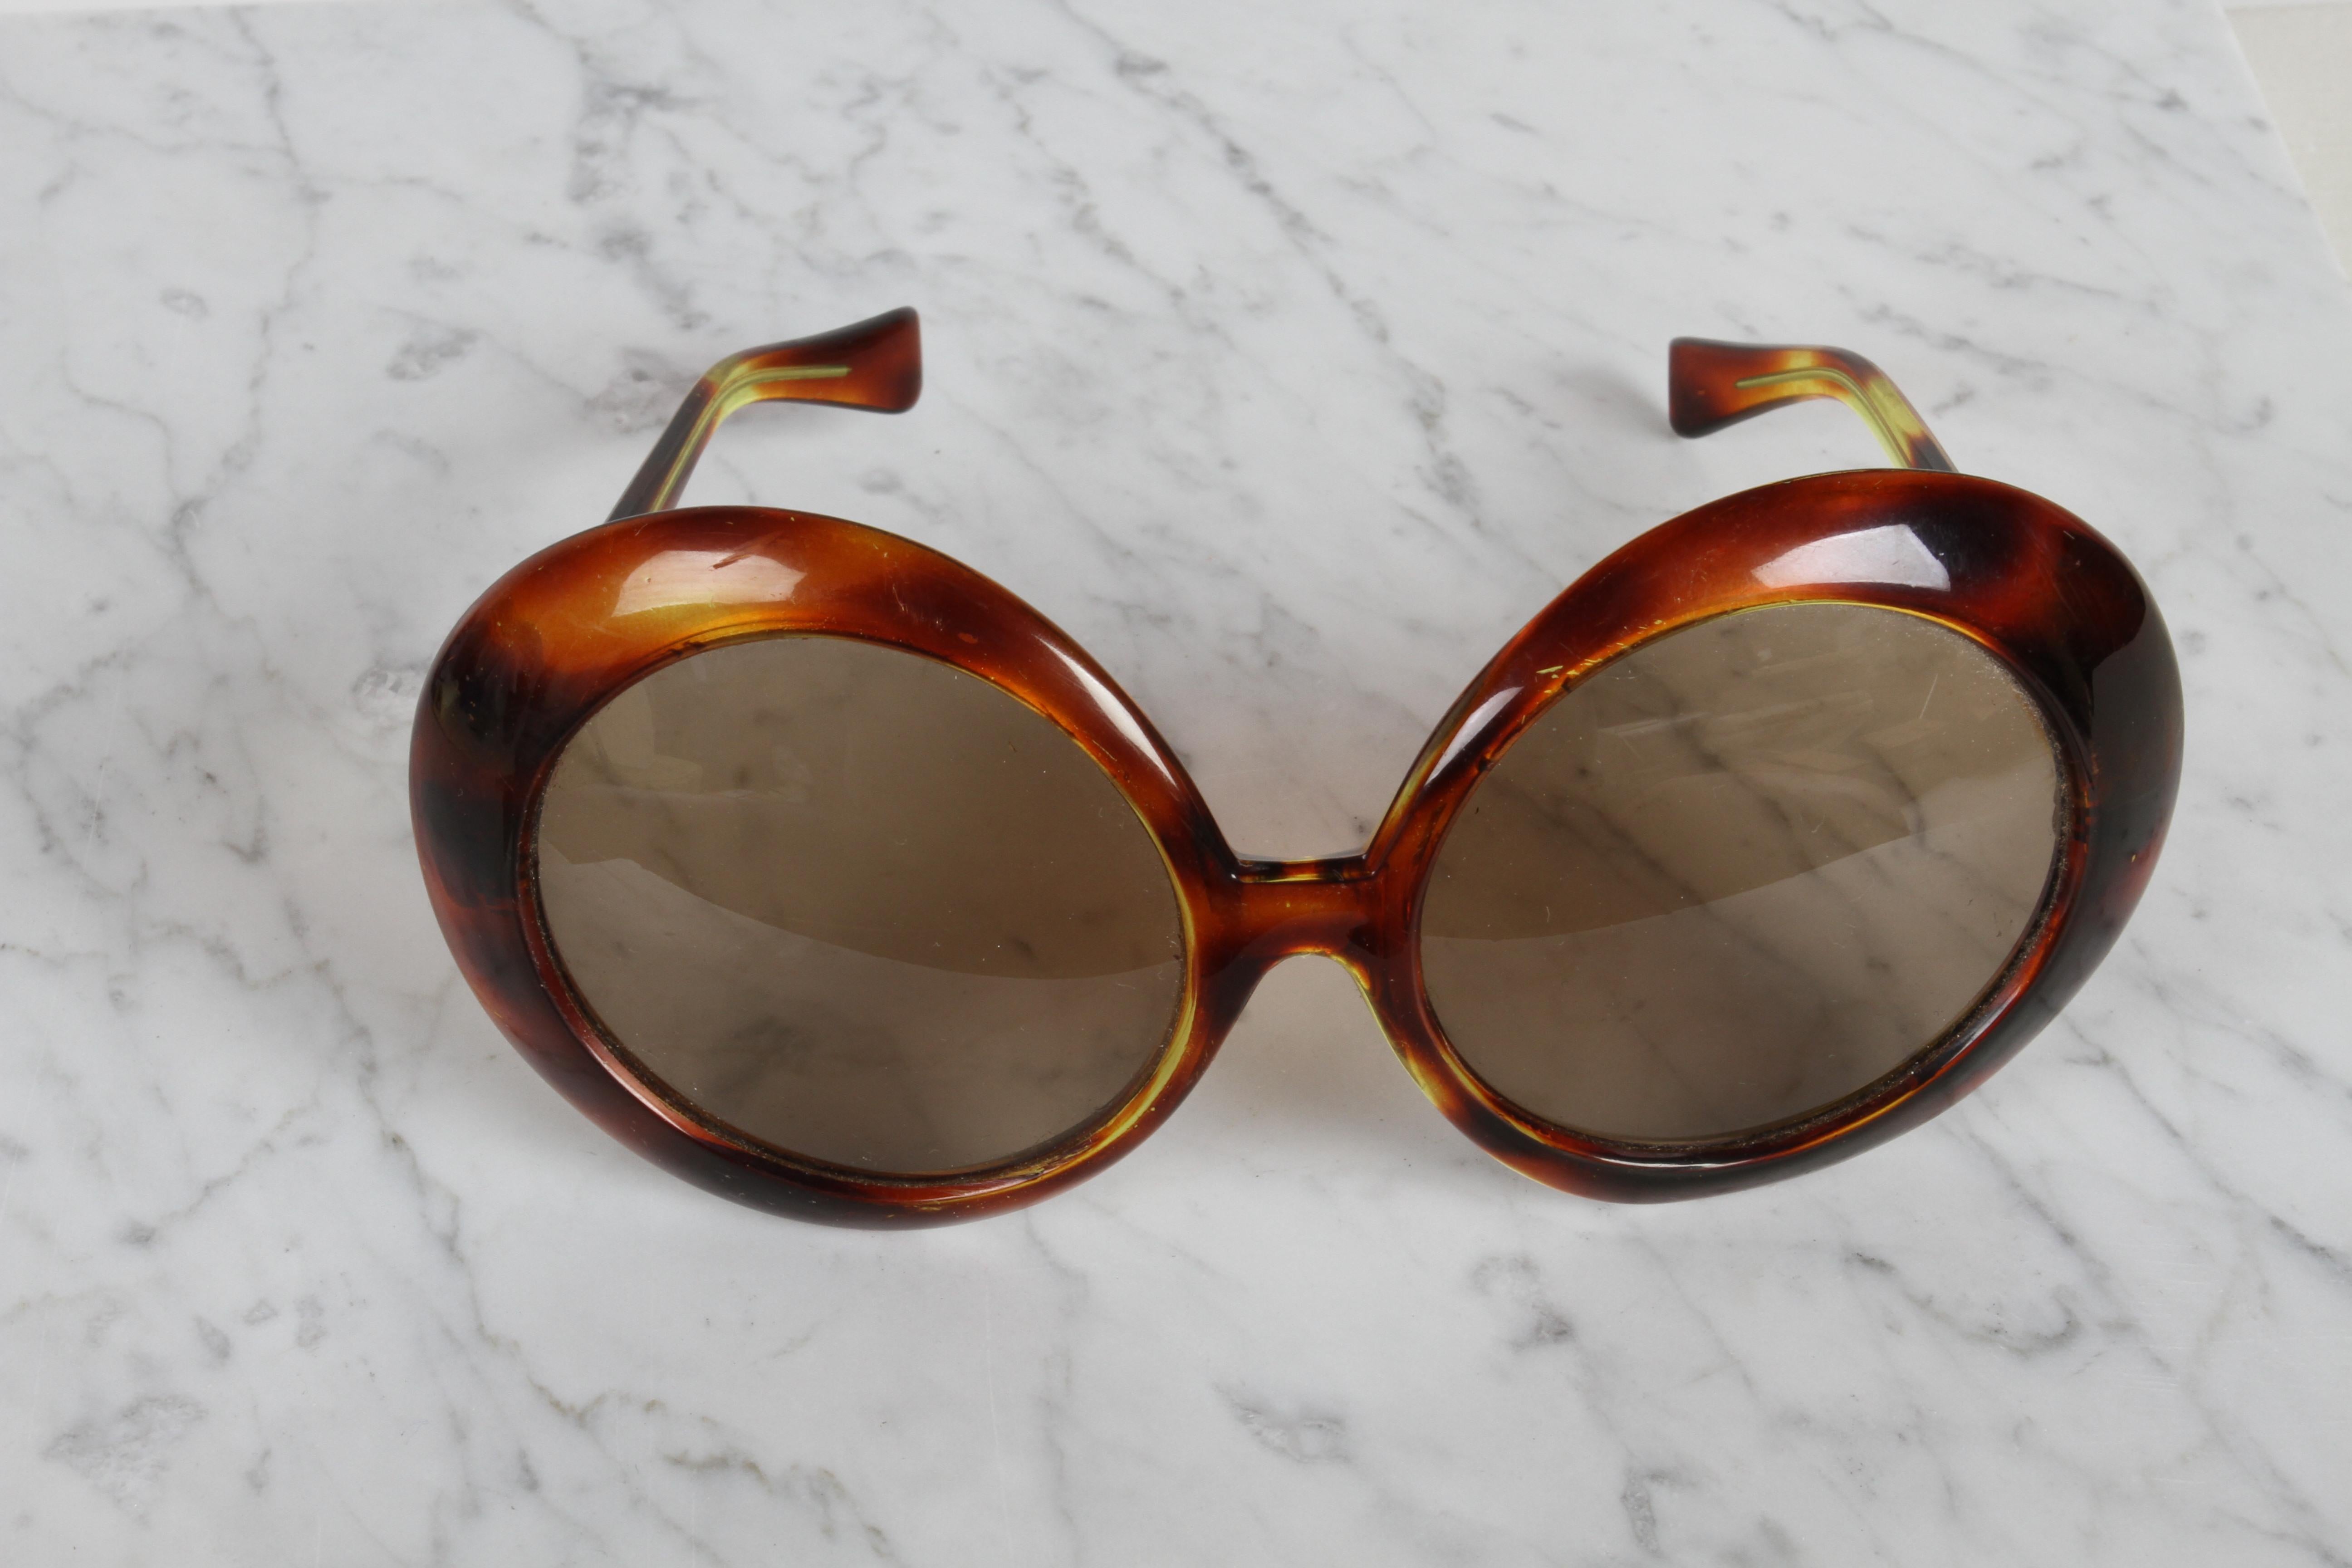 Hollywood Regency Vintage 1960s Glamorous Women's Oversized Tortoise Sunglasses - Made in Italy  For Sale